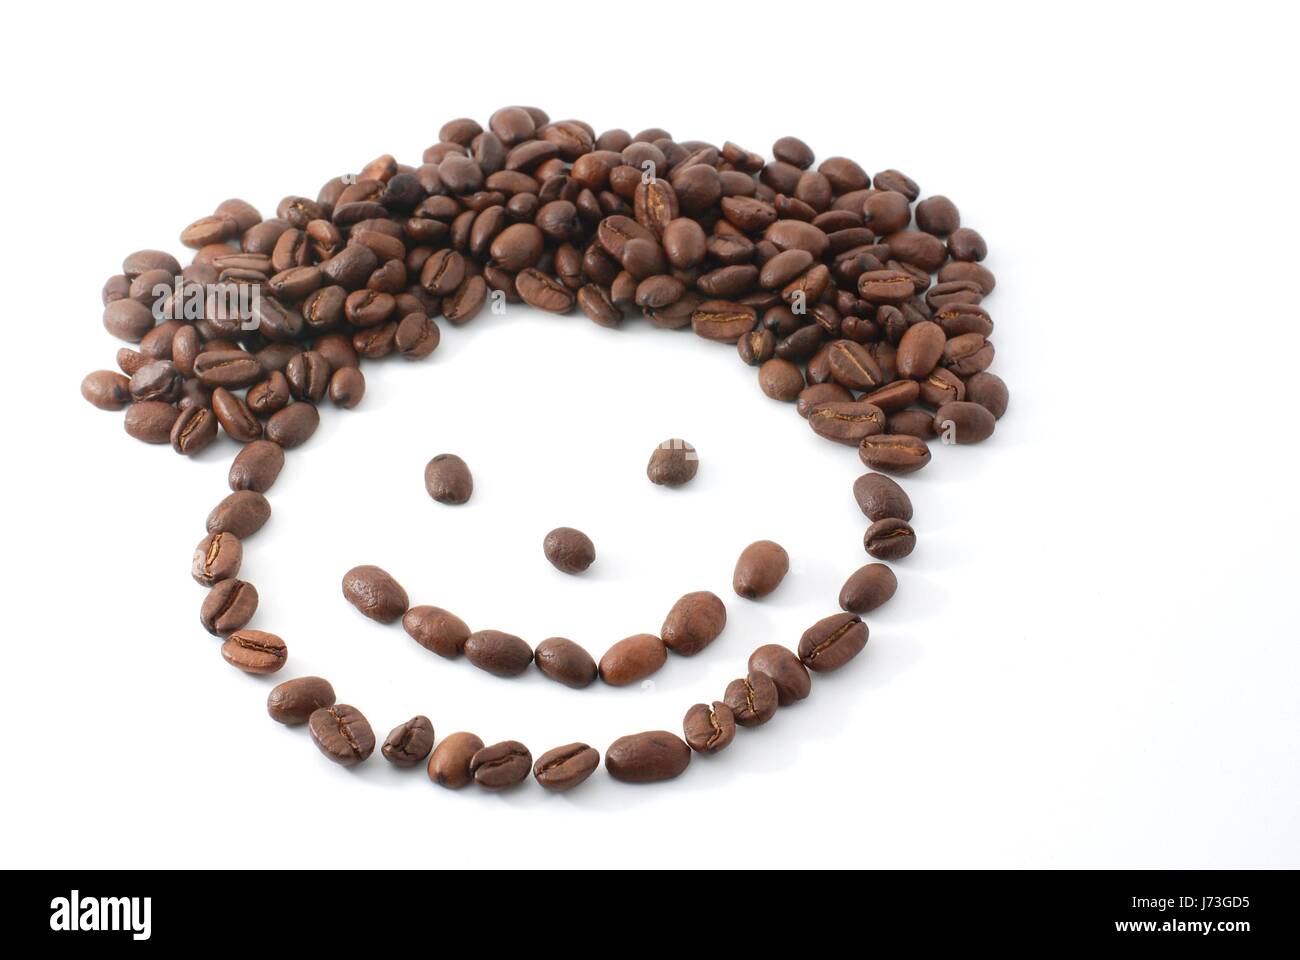 coffee coffee bean semiluxury food caffeine enthusiasm amusement enjoyment joy Stock Photo